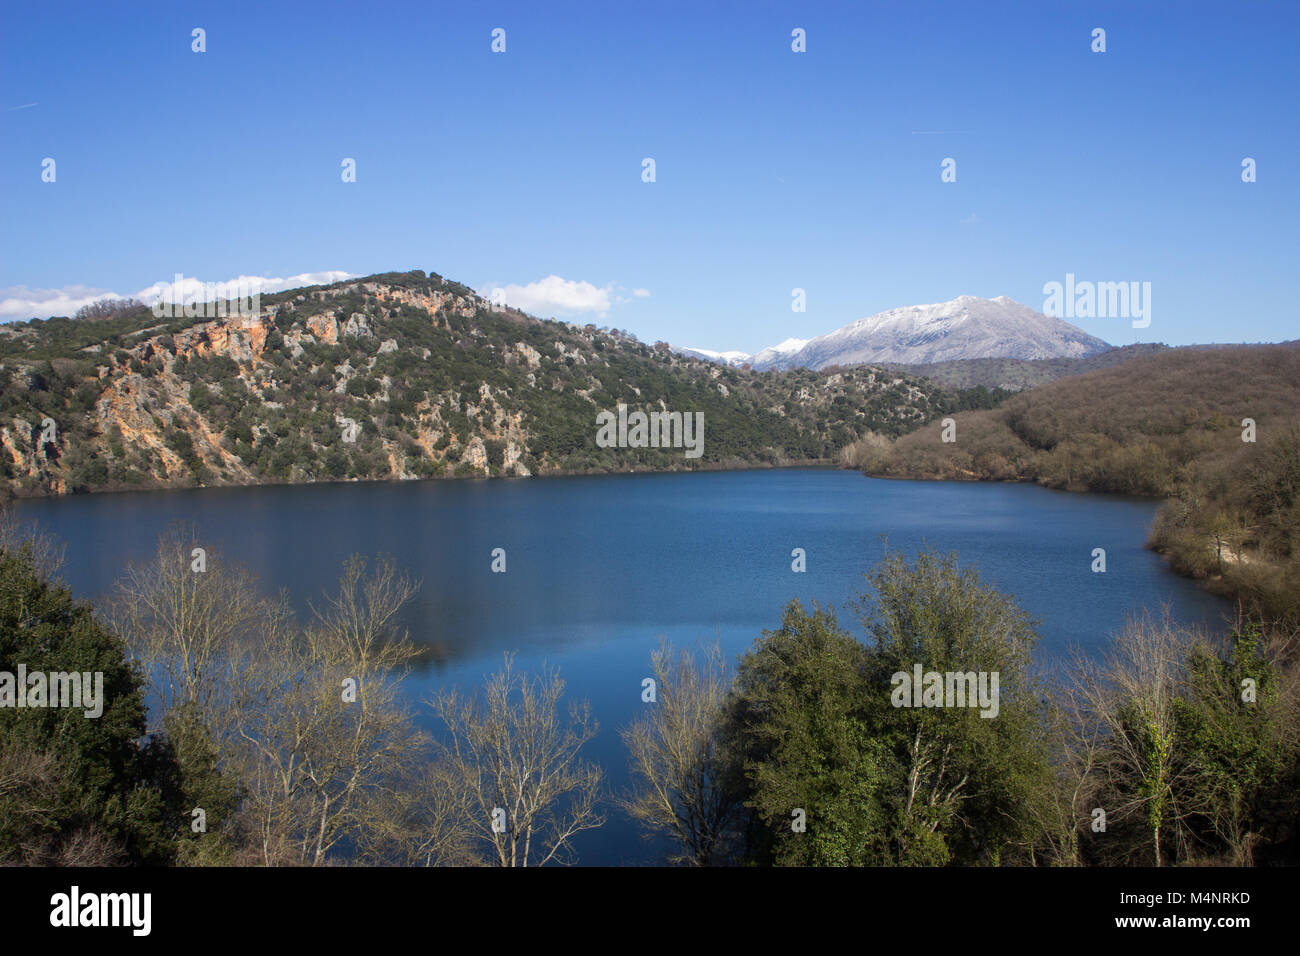 Zeros lake in Filippiada, Preveza, Greece Stock Photo